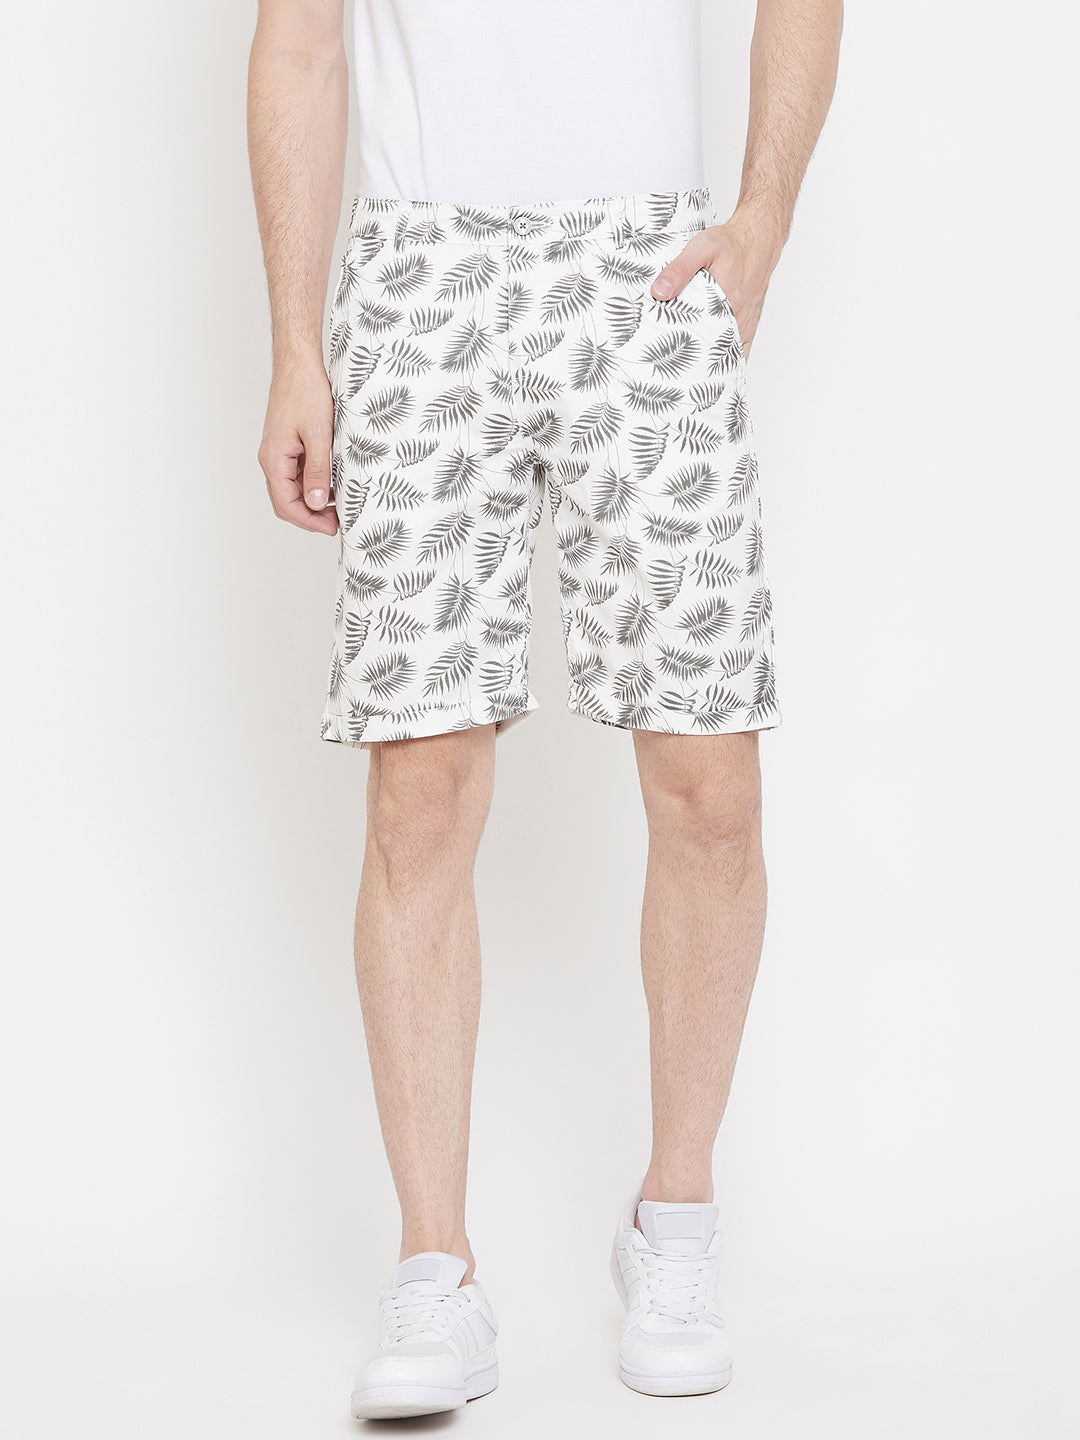 White Printed shorts - Men Shorts